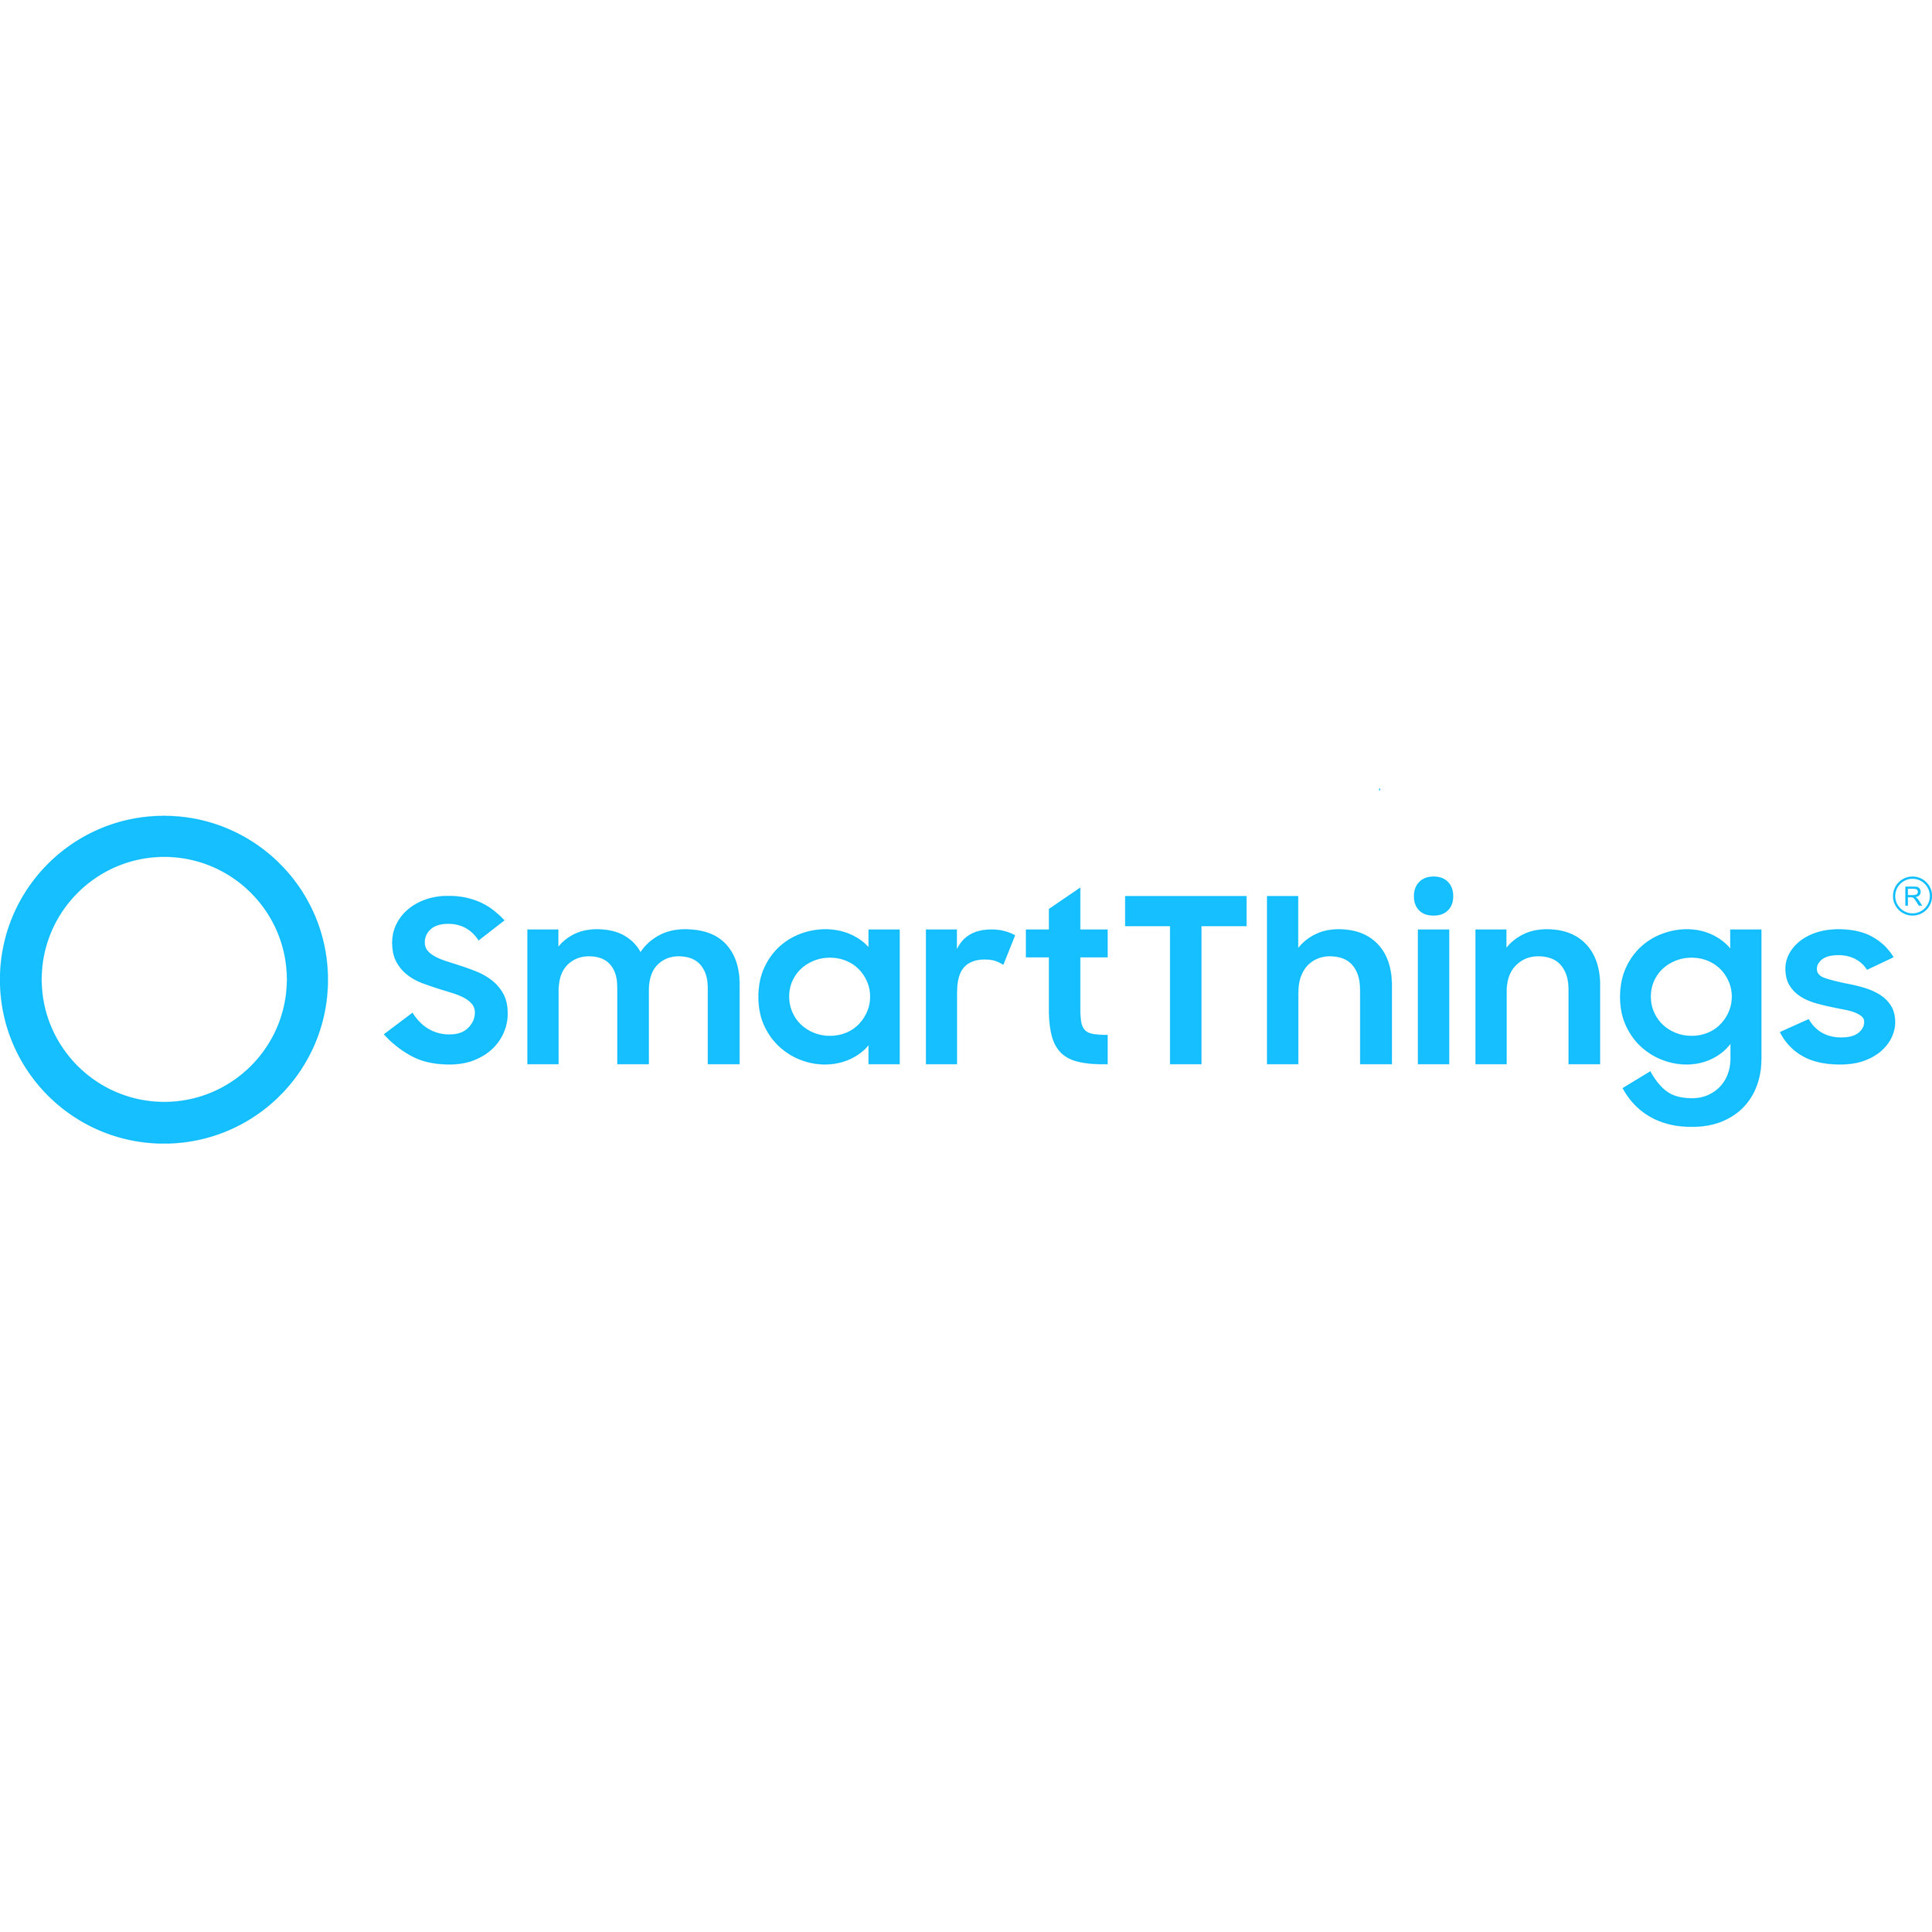 Samsung SmartThings Logo 3928x3928.jpg